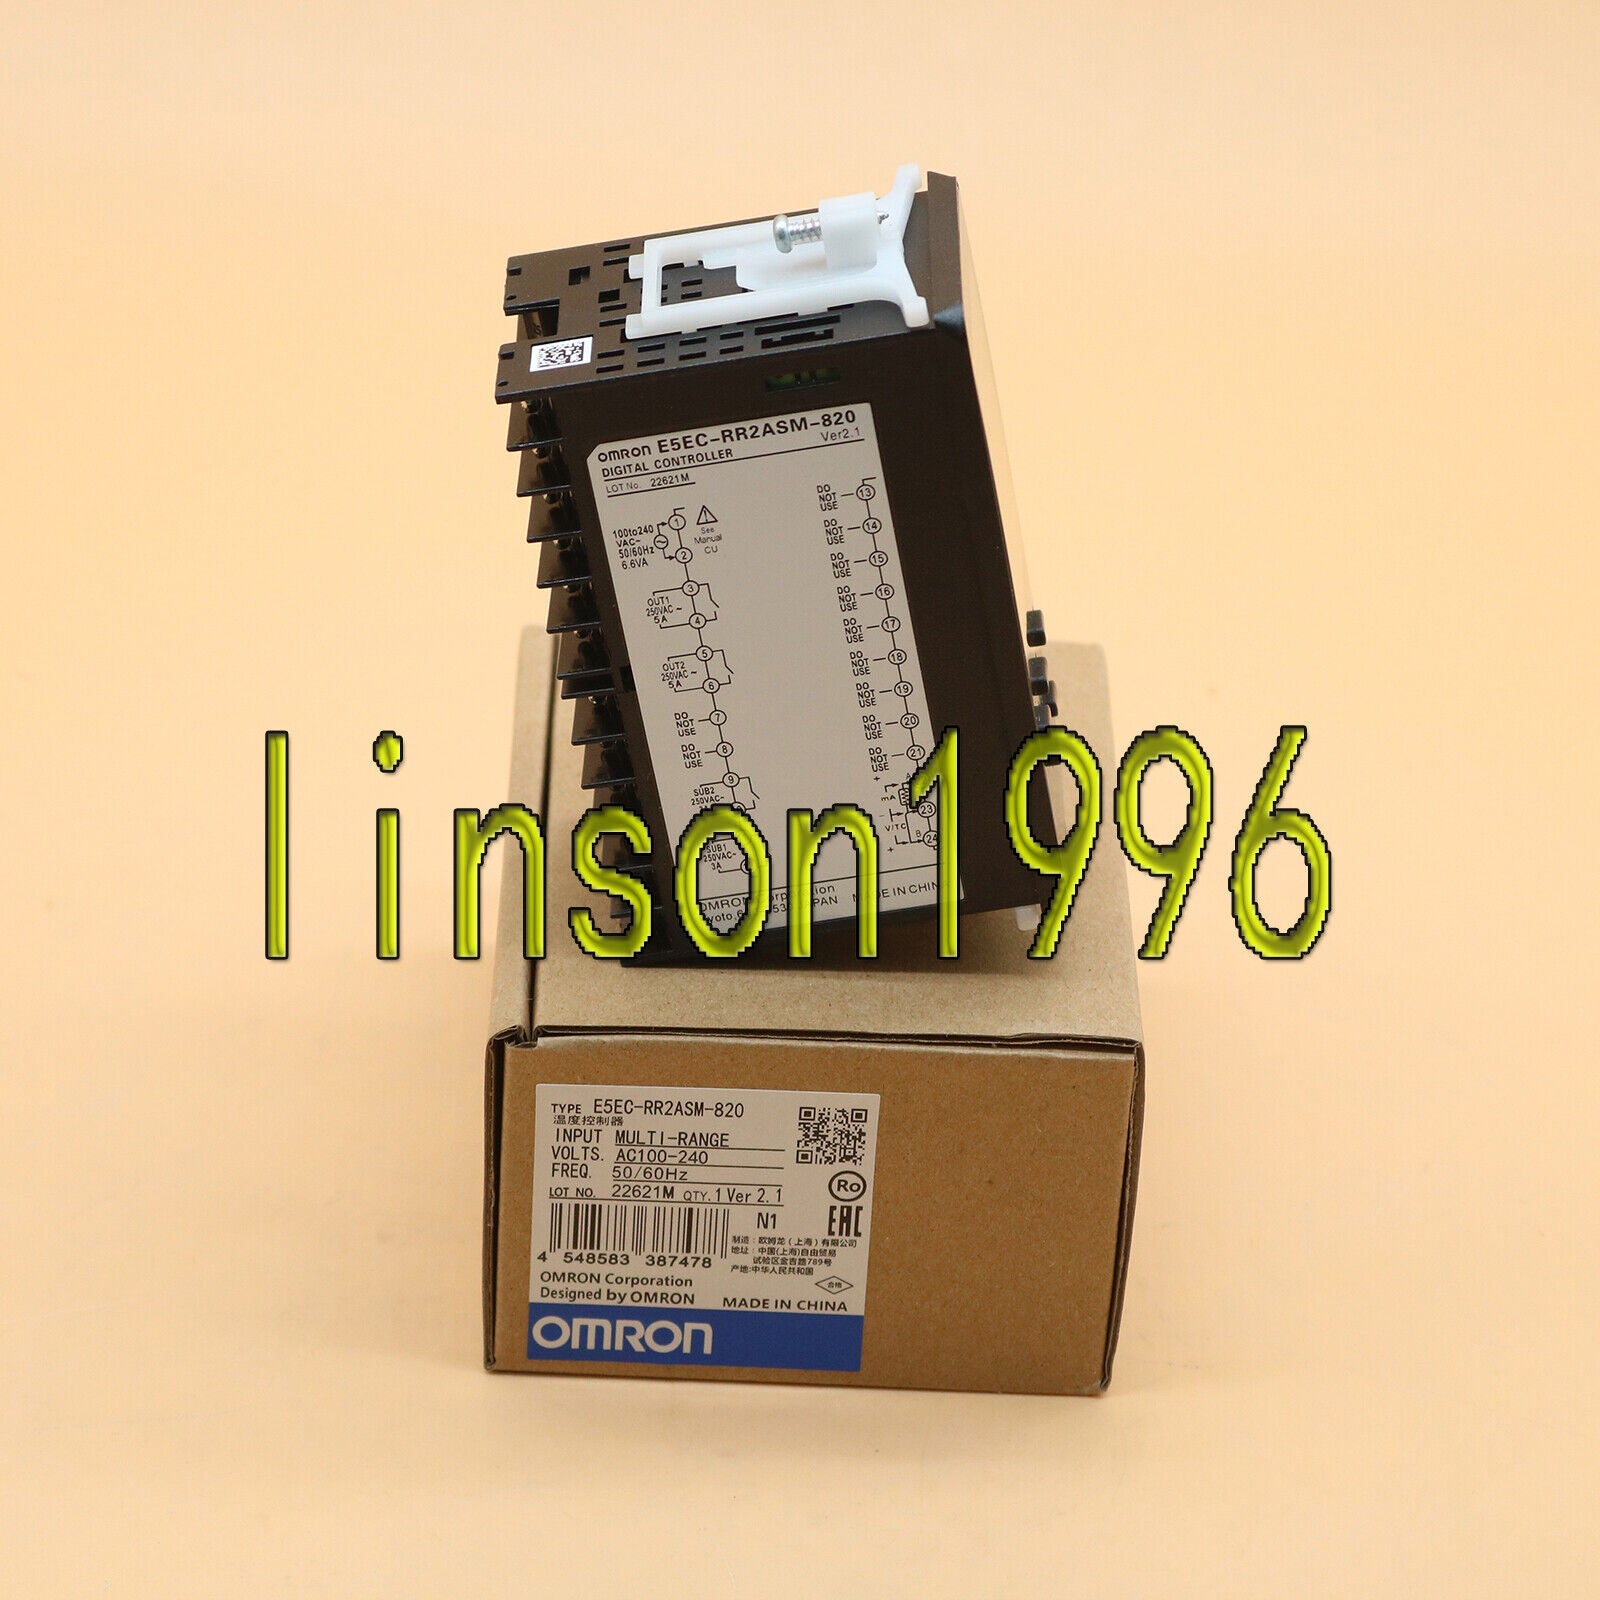 new ONE  Omron Temperature Controller E5EC-RR2ASM-820 100-240VAC